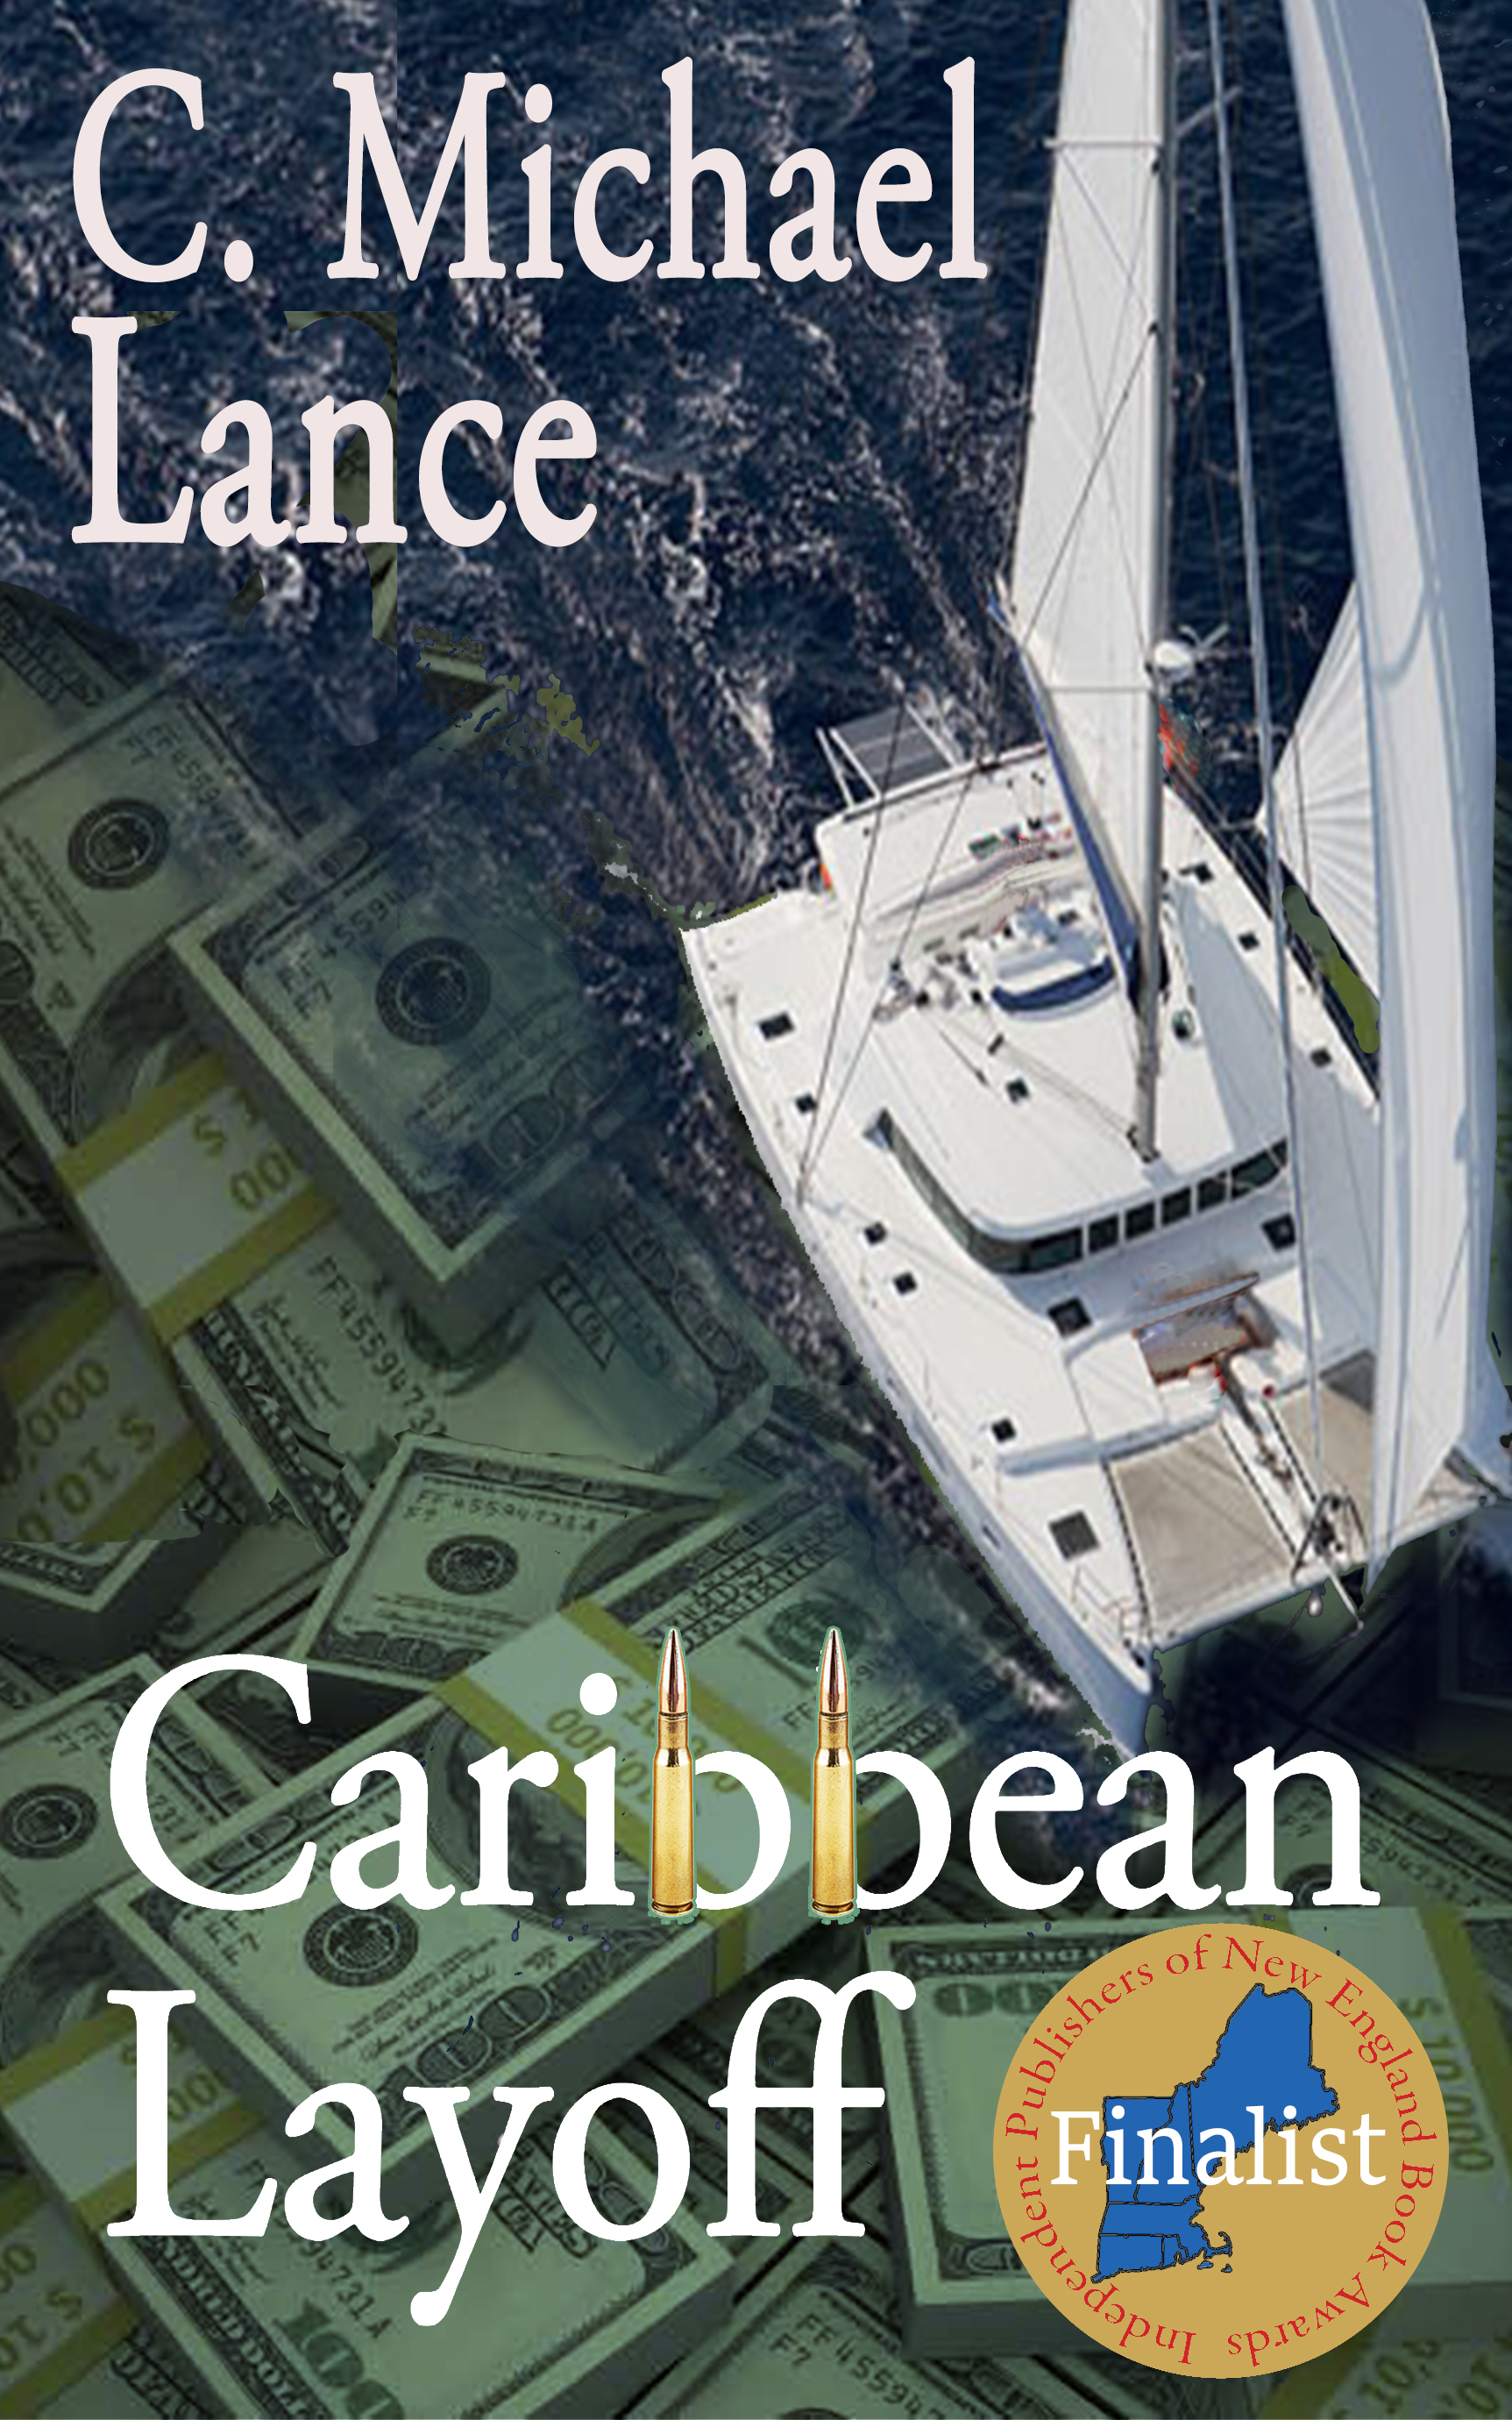 Caribbean Layoff